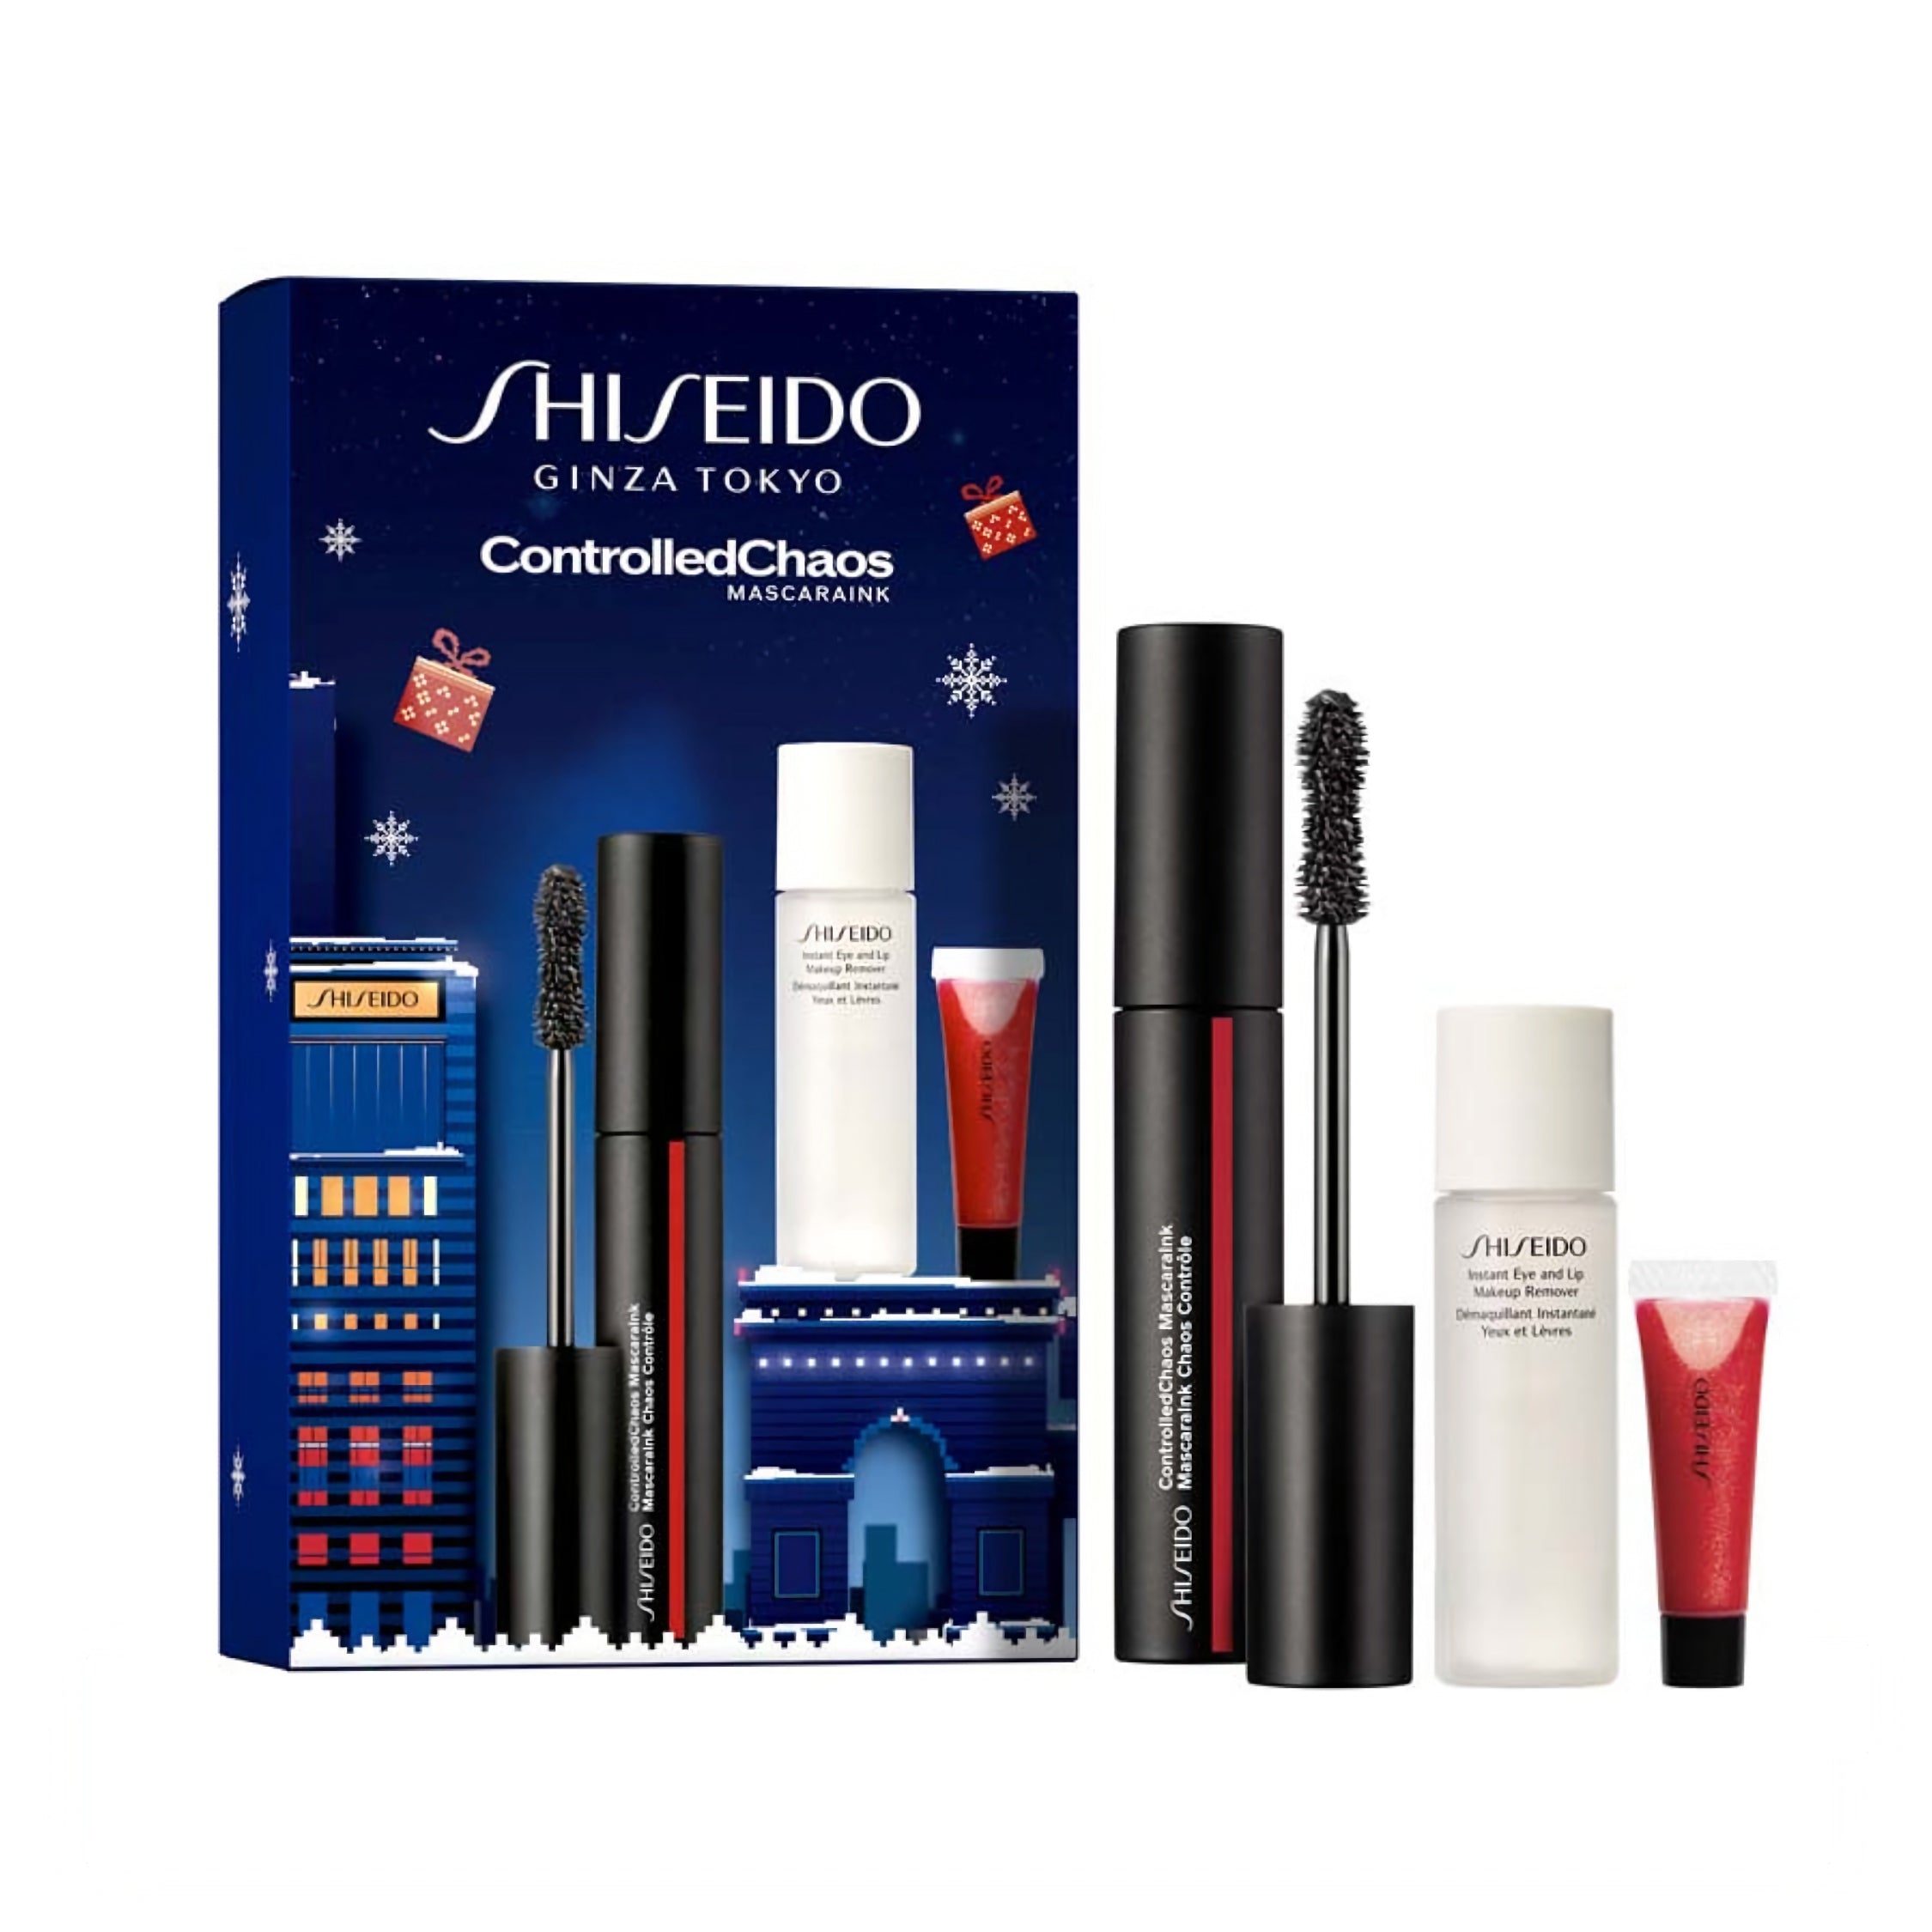 Shiseido - ControlledChaos MascaraInk - Cofanetto regalo